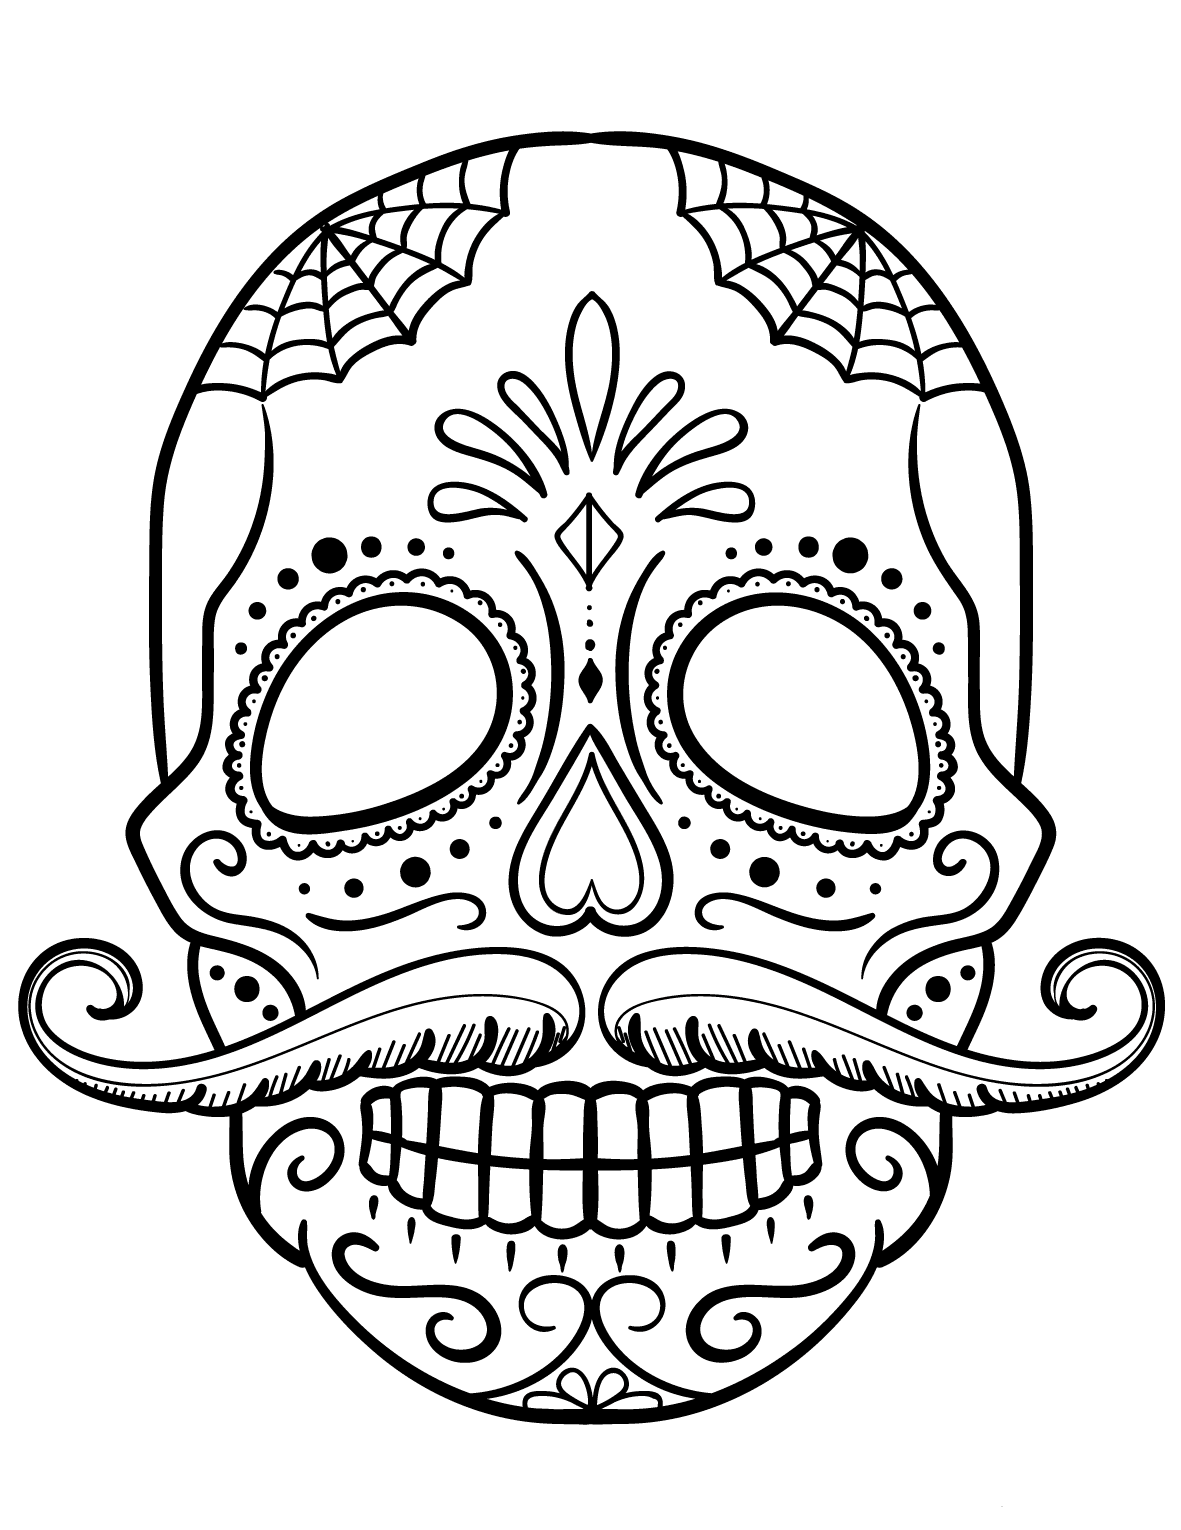 Download 30 Free Printable Sugar Skull Coloring Pages